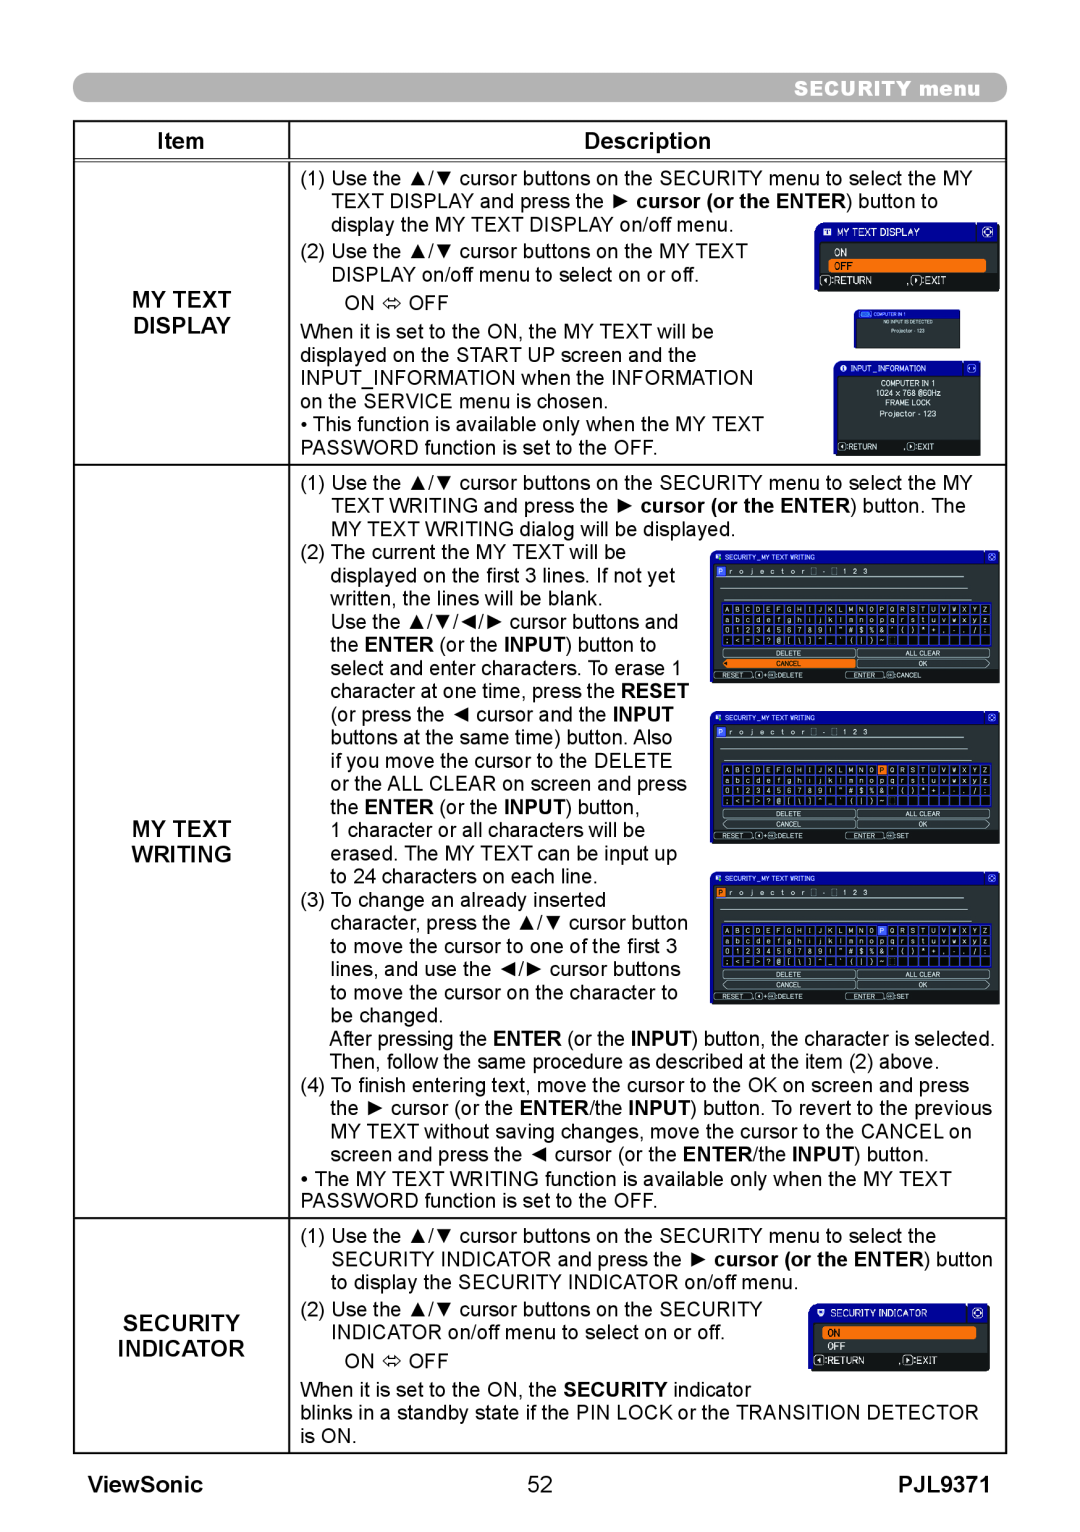 ViewSonic pjl9371 manual Item, Description, My Text, Display, Writing, Security, Indicator, ViewSonic 